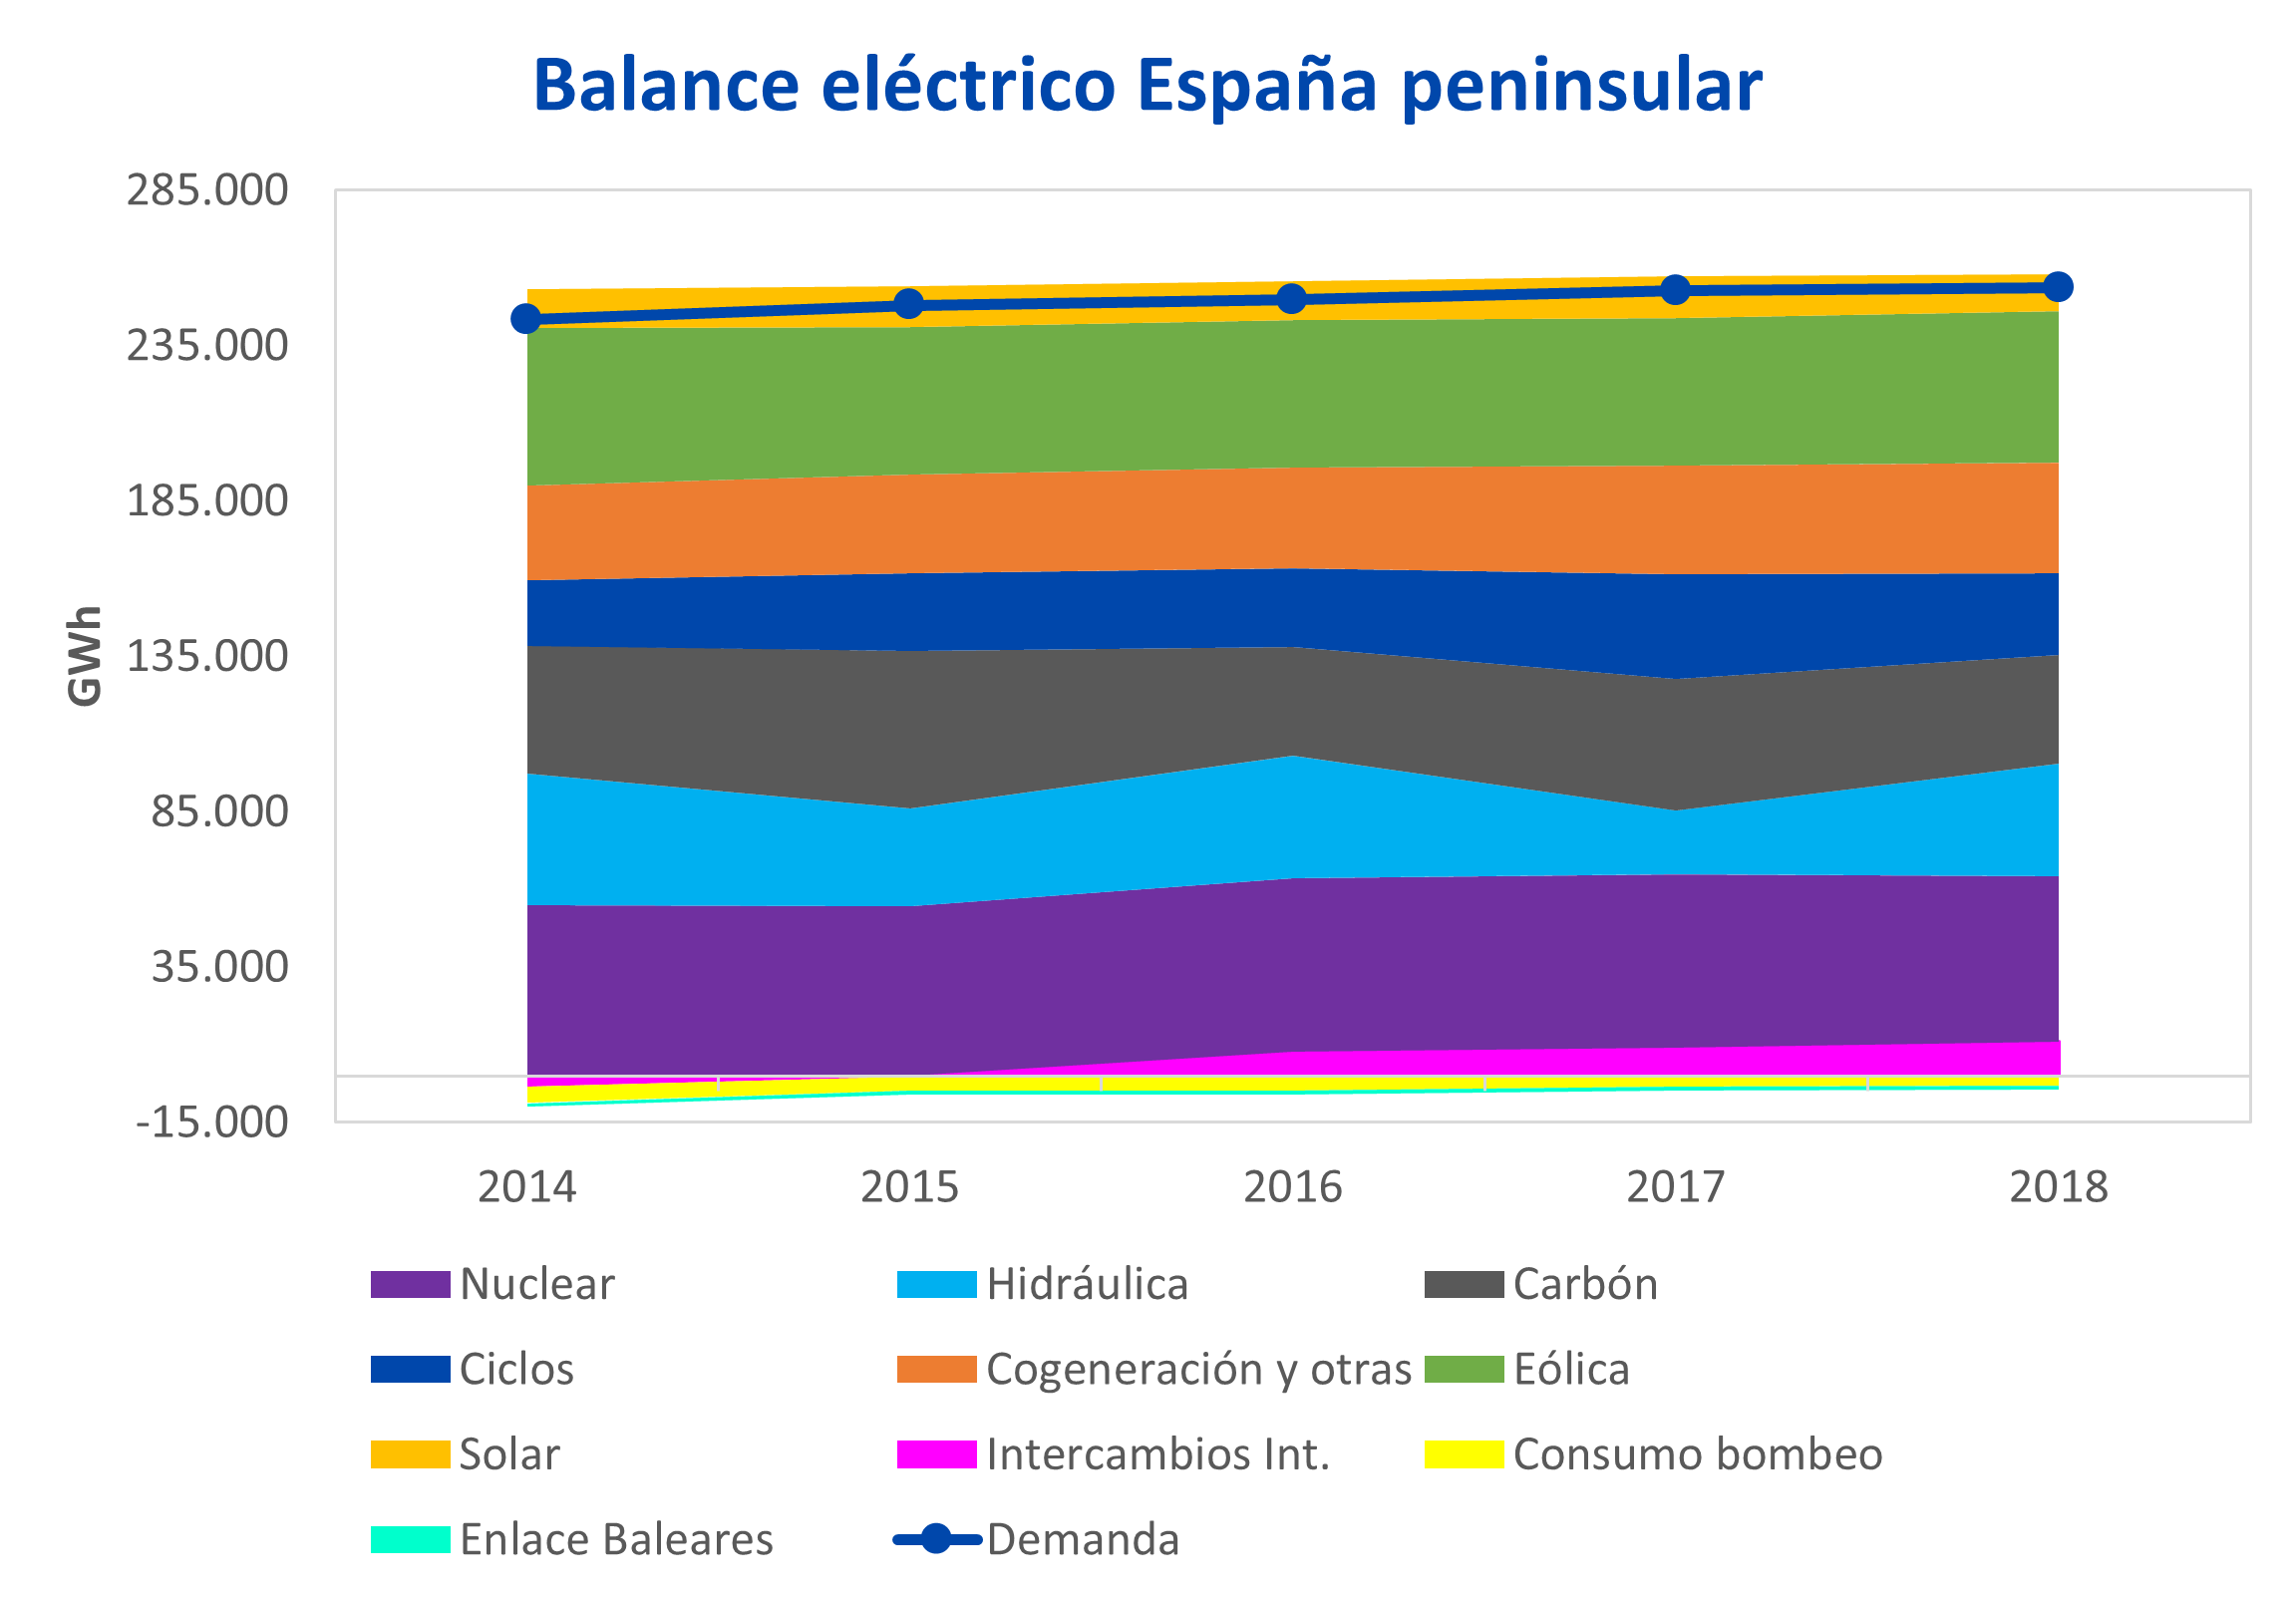 AleaSoft - Balance eléctrico España peninsular